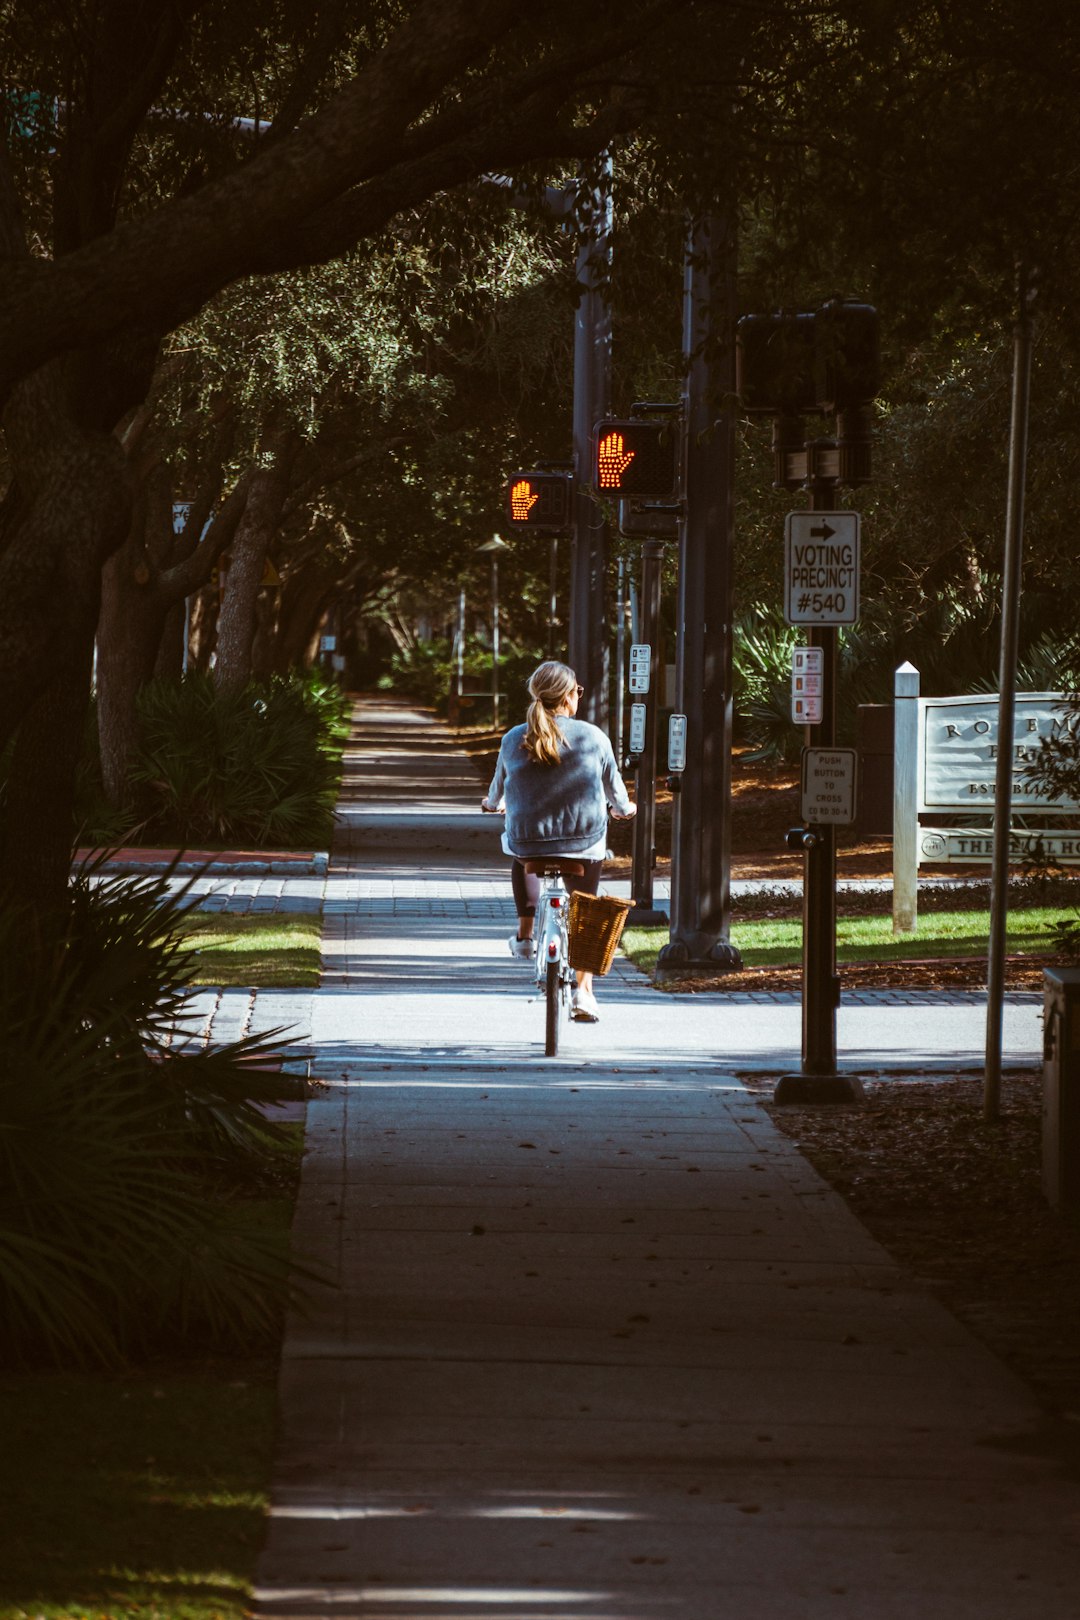 woman riding bike on sidewalk near trees and traffic lights